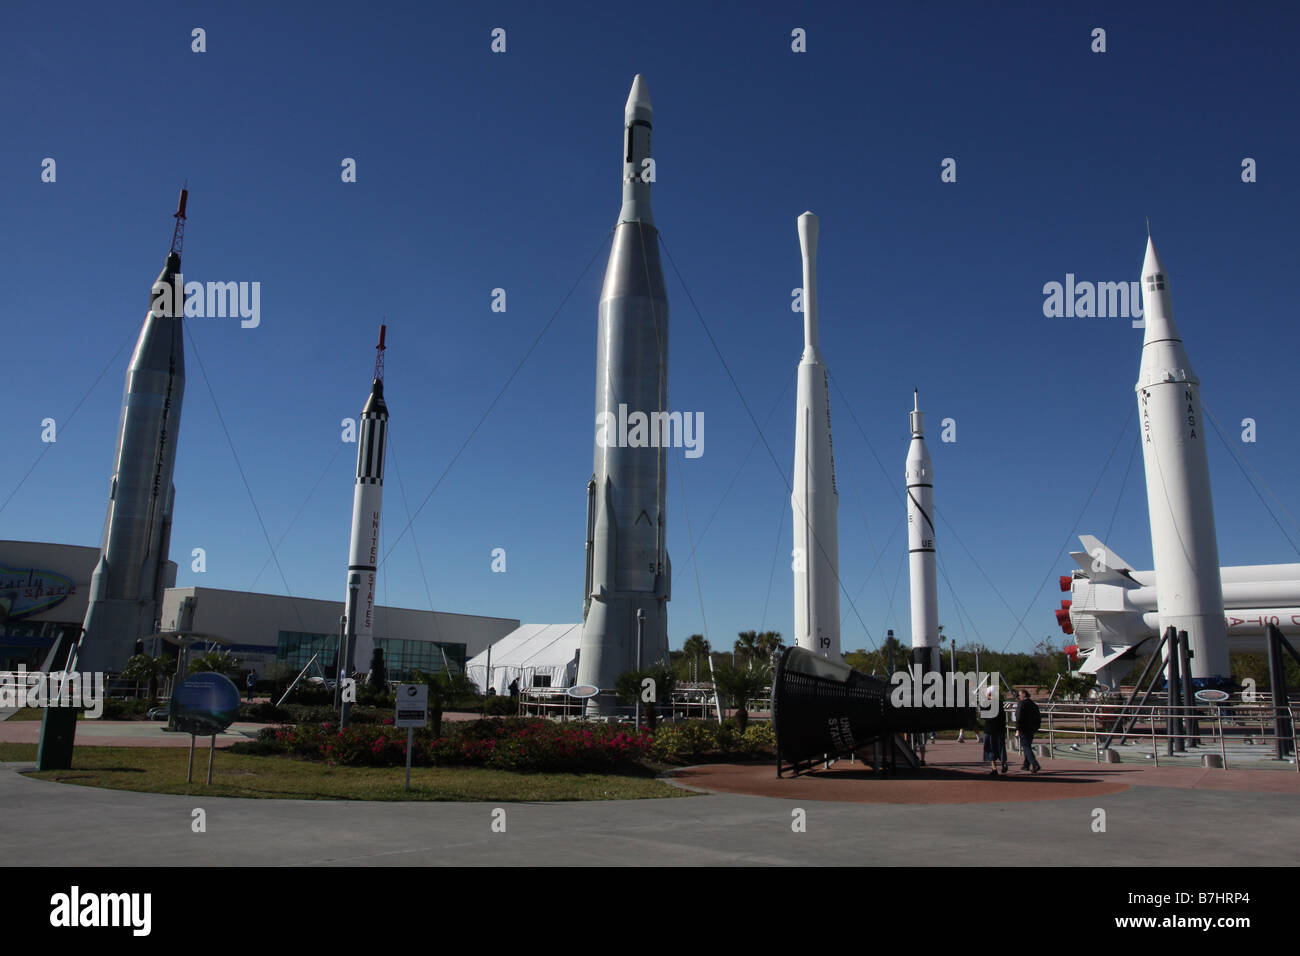 NASA-Mercury Familie Raketen Besucherzentrum Kennedy Space Center Cape Canaveral Tour Tourist Museum Anzeige Rakete Stockfoto